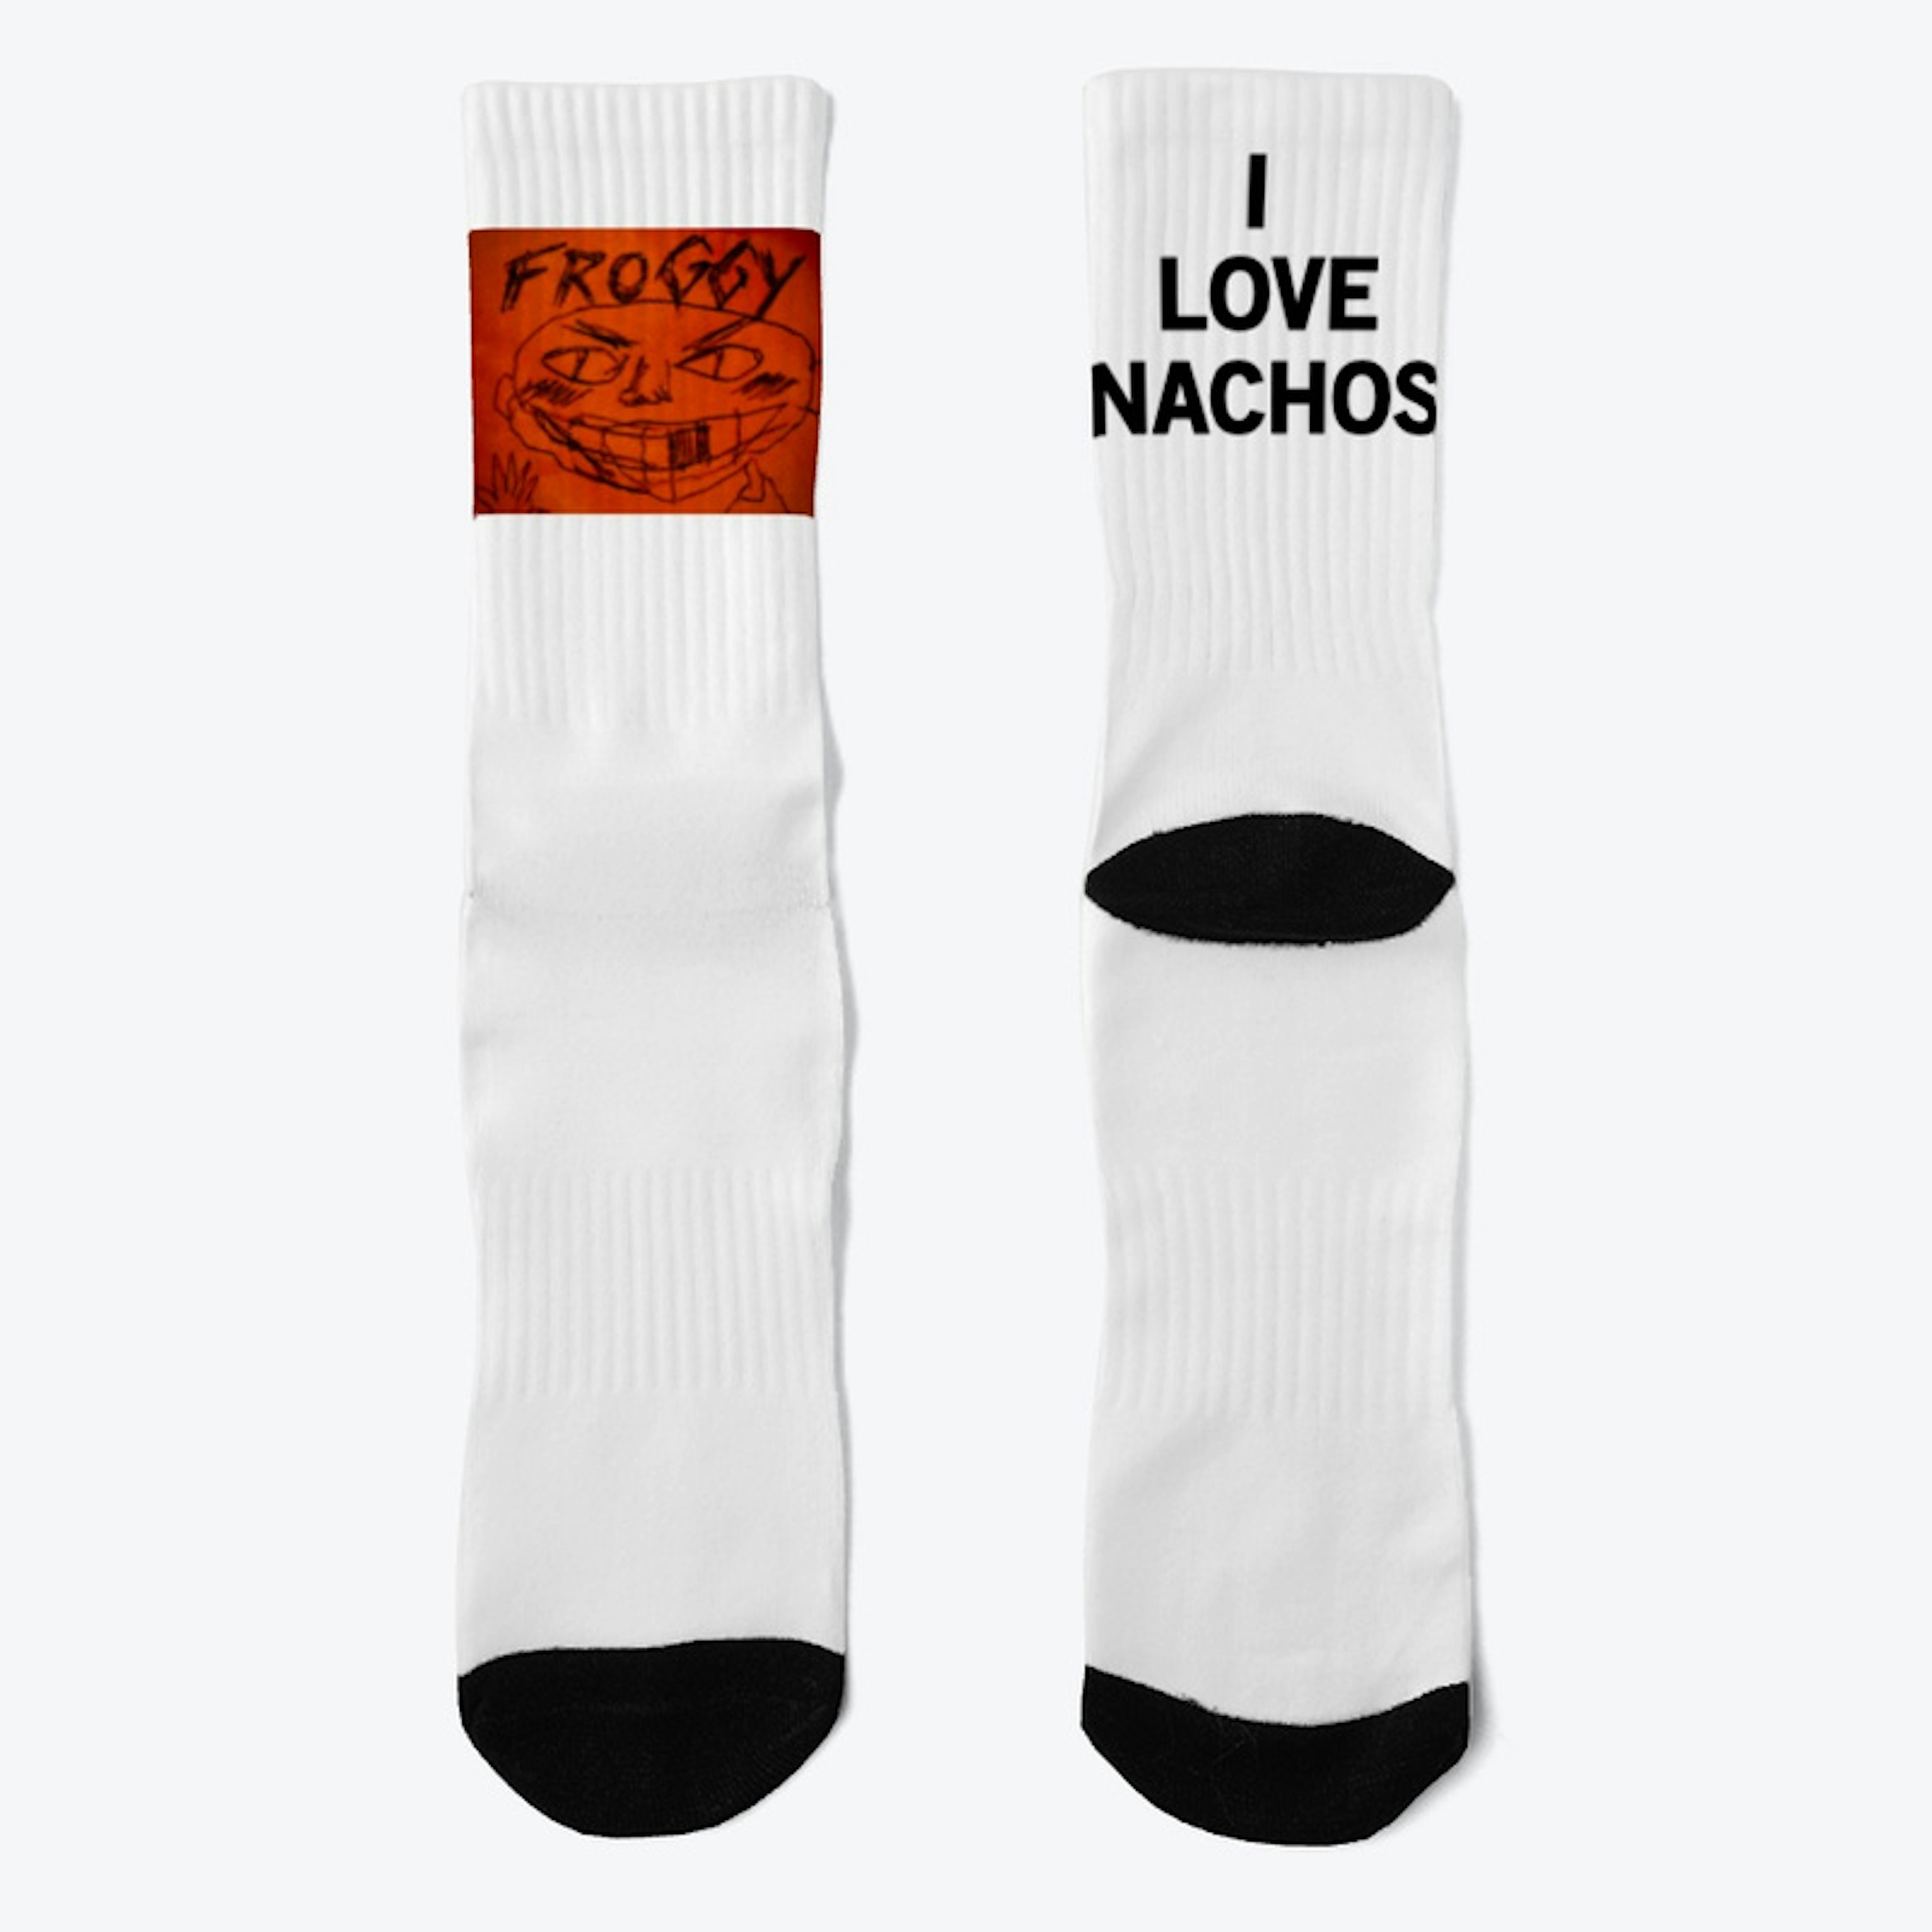 Nacho Lovers Socks